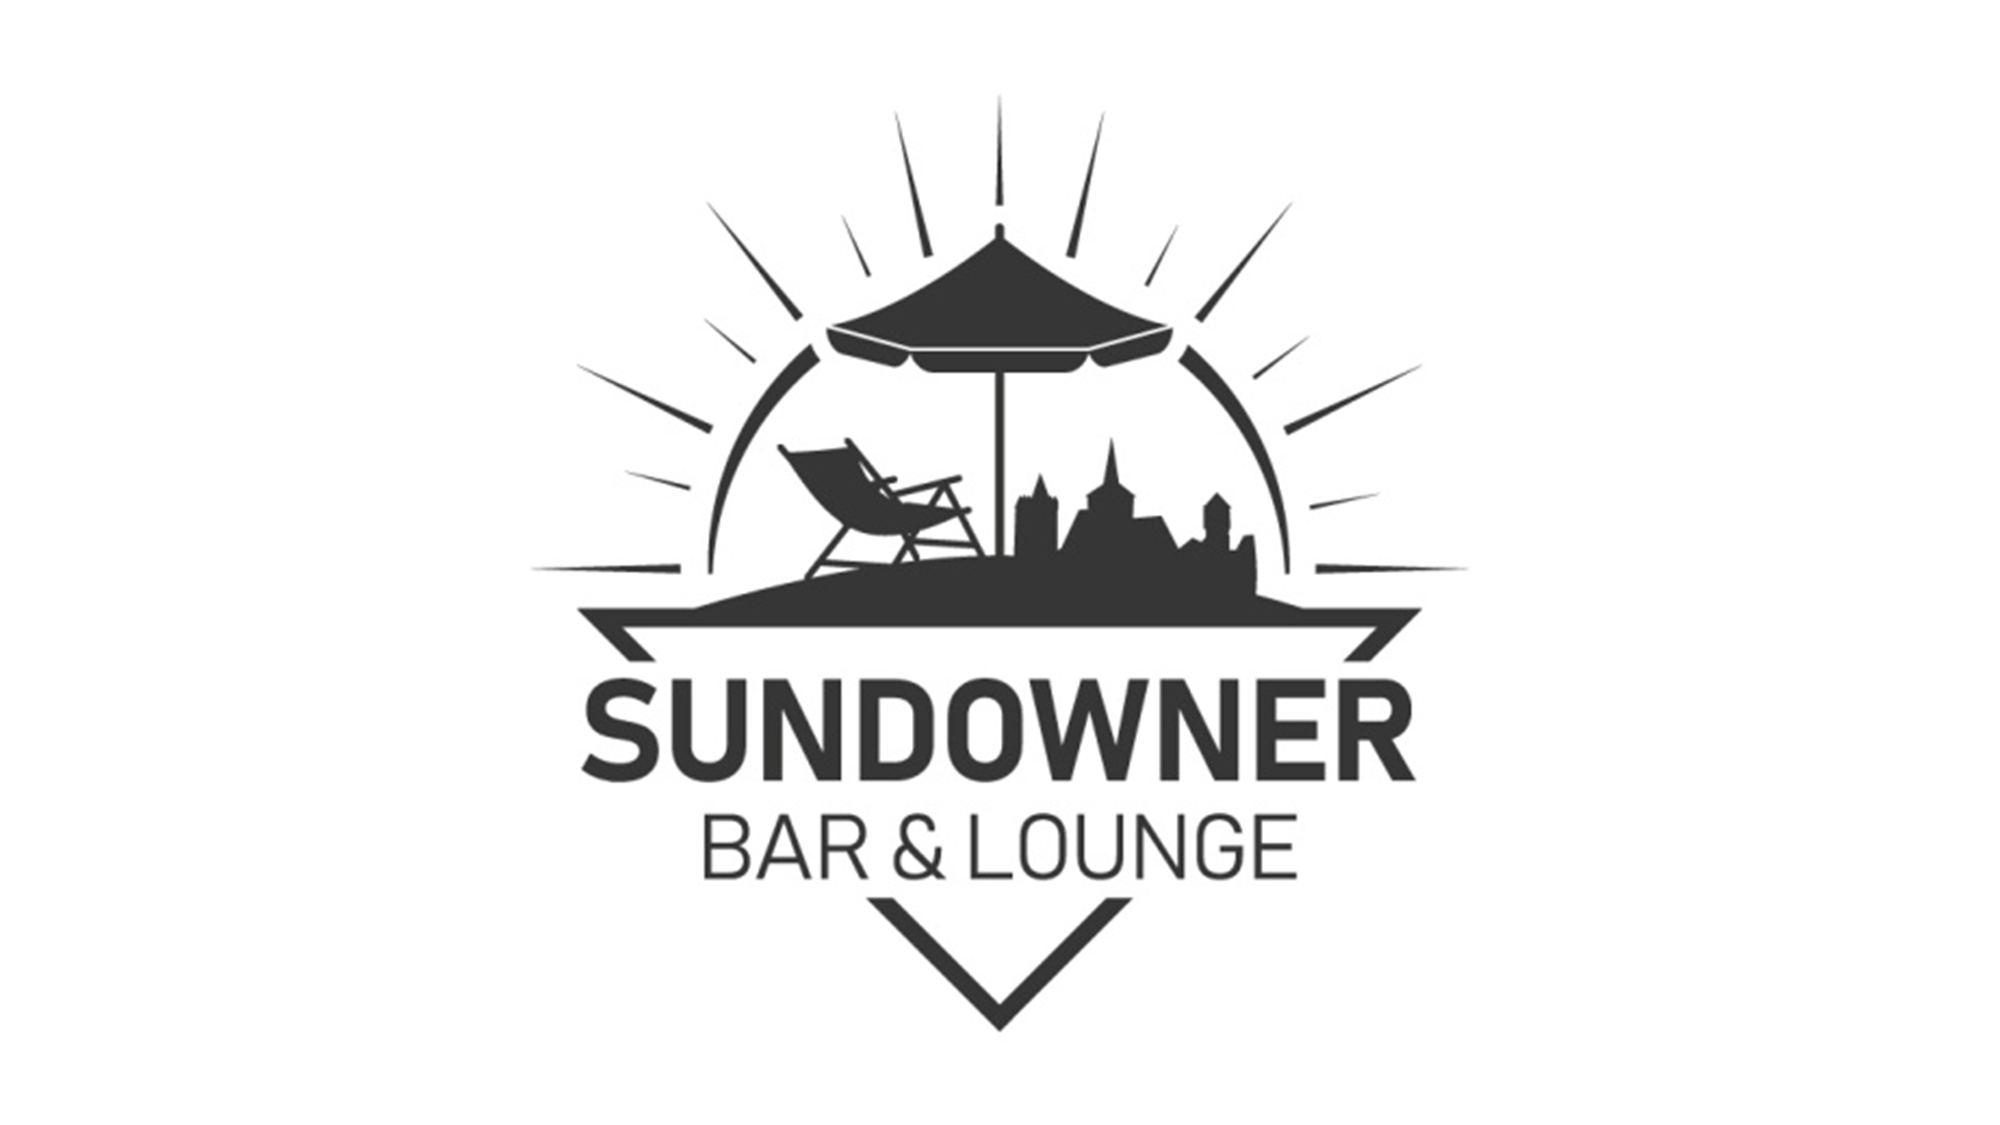 www.sundowner.bar